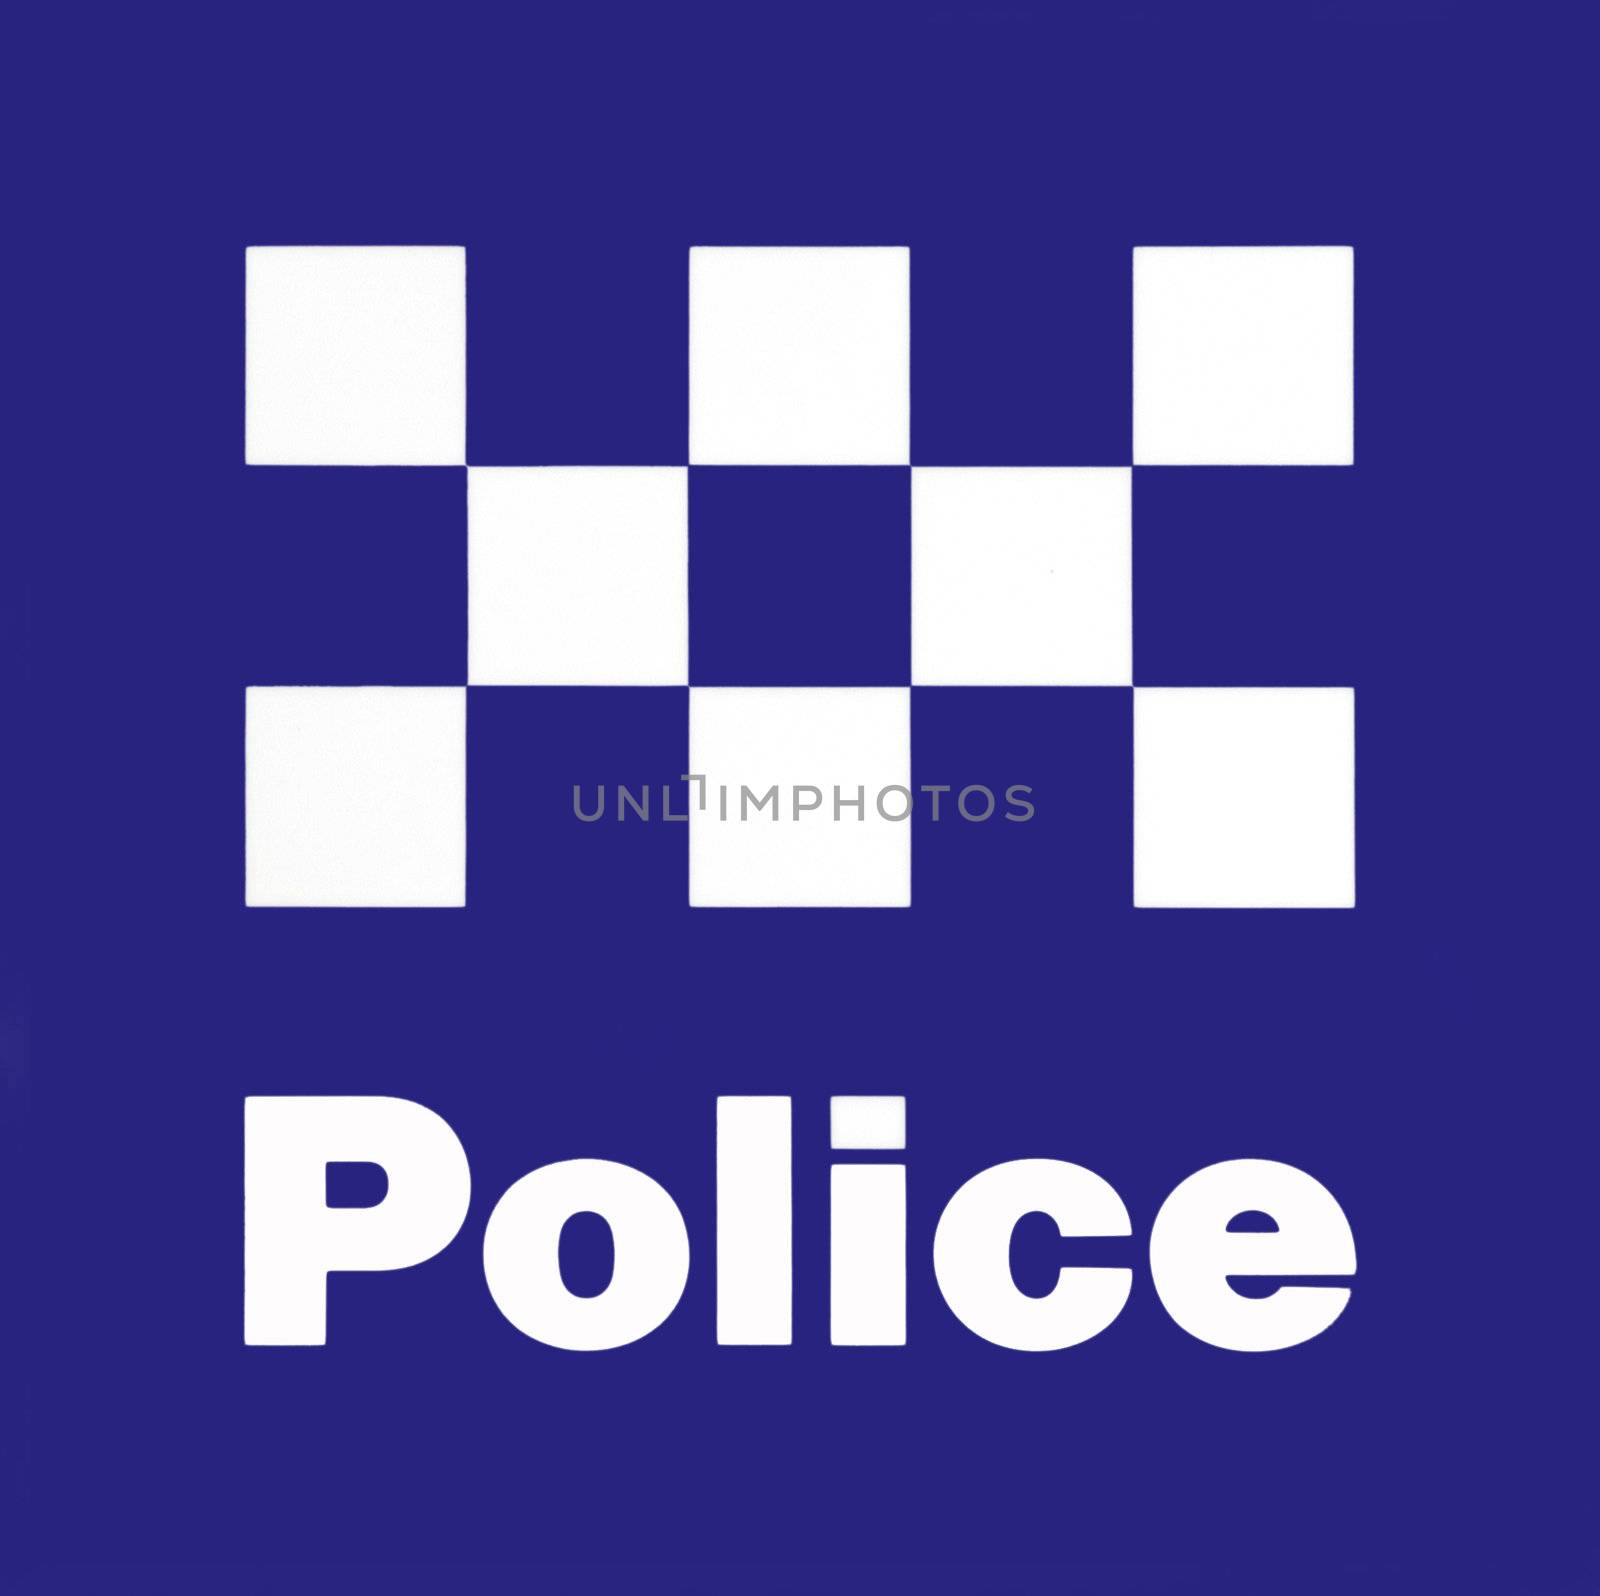 Police Station Sign - White On Blue